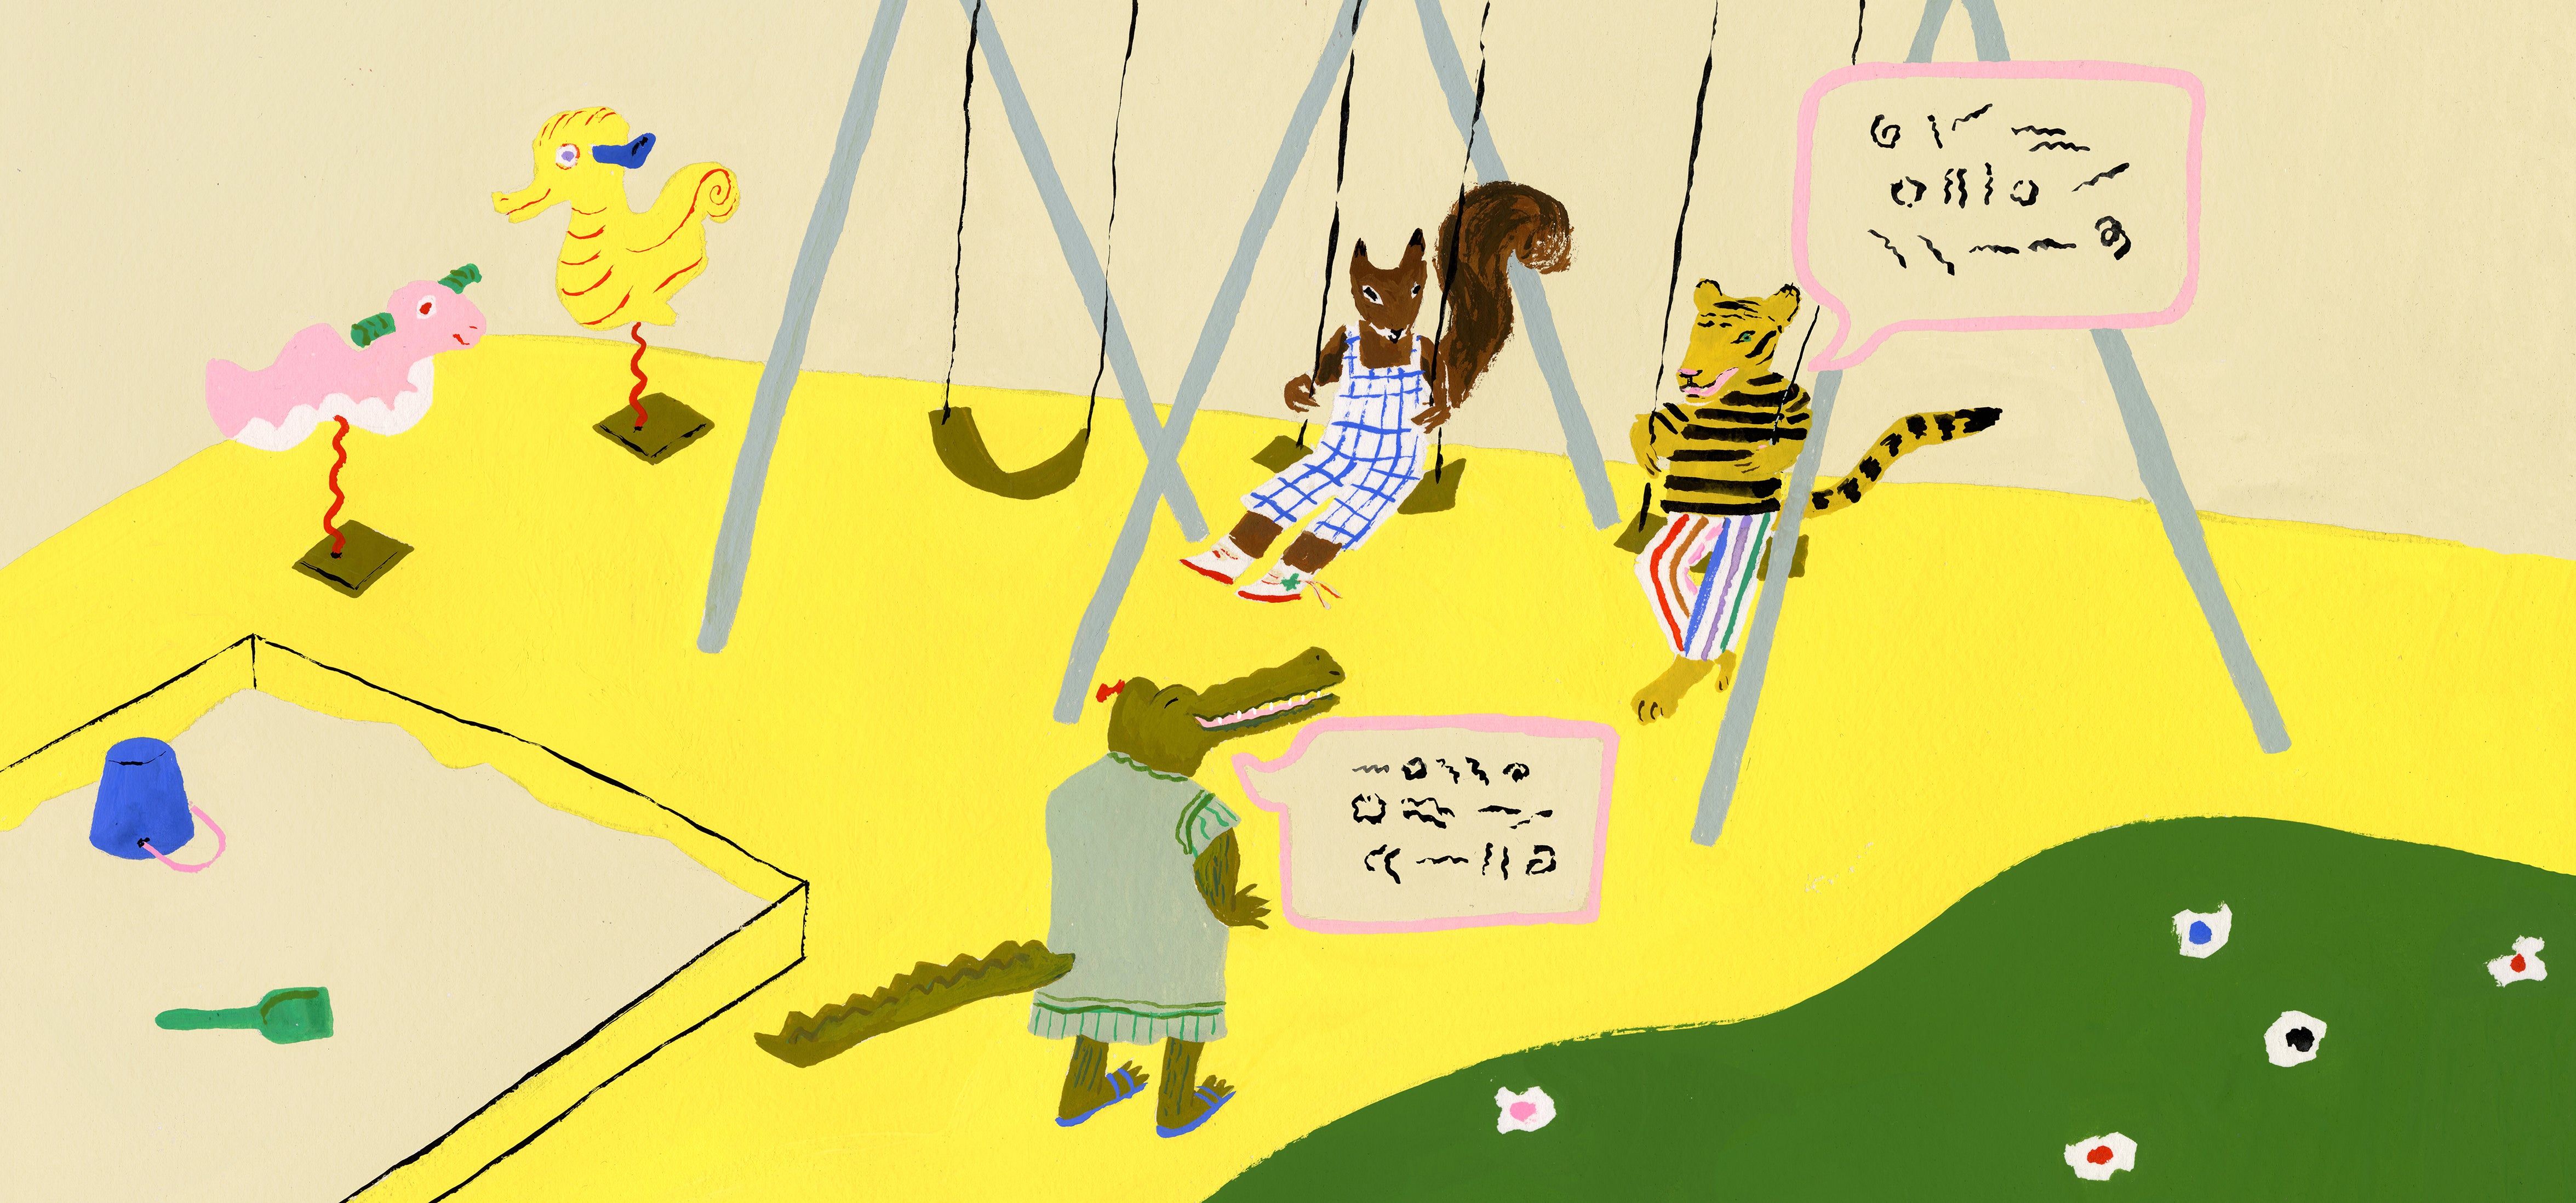 Playful illustration of animals on a playground conversing